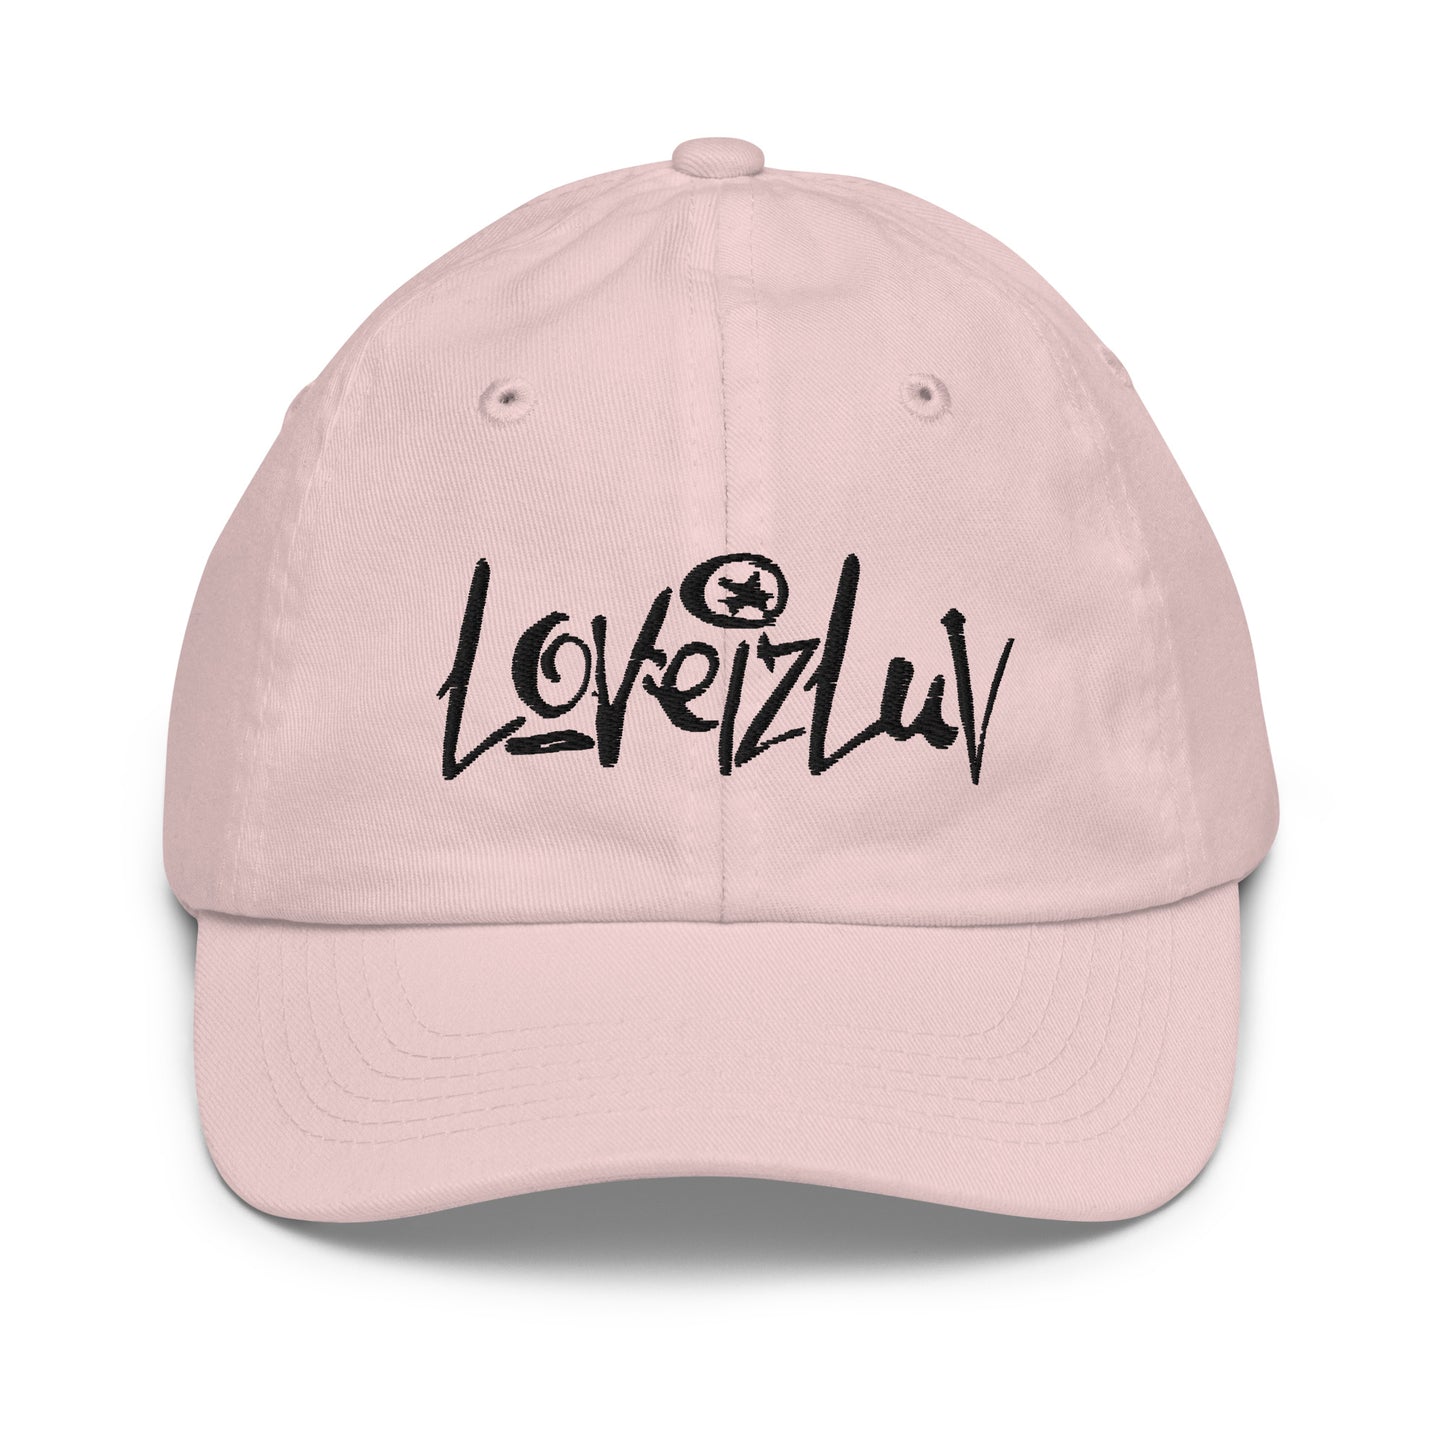 LoveizLuv Youth baseball cap